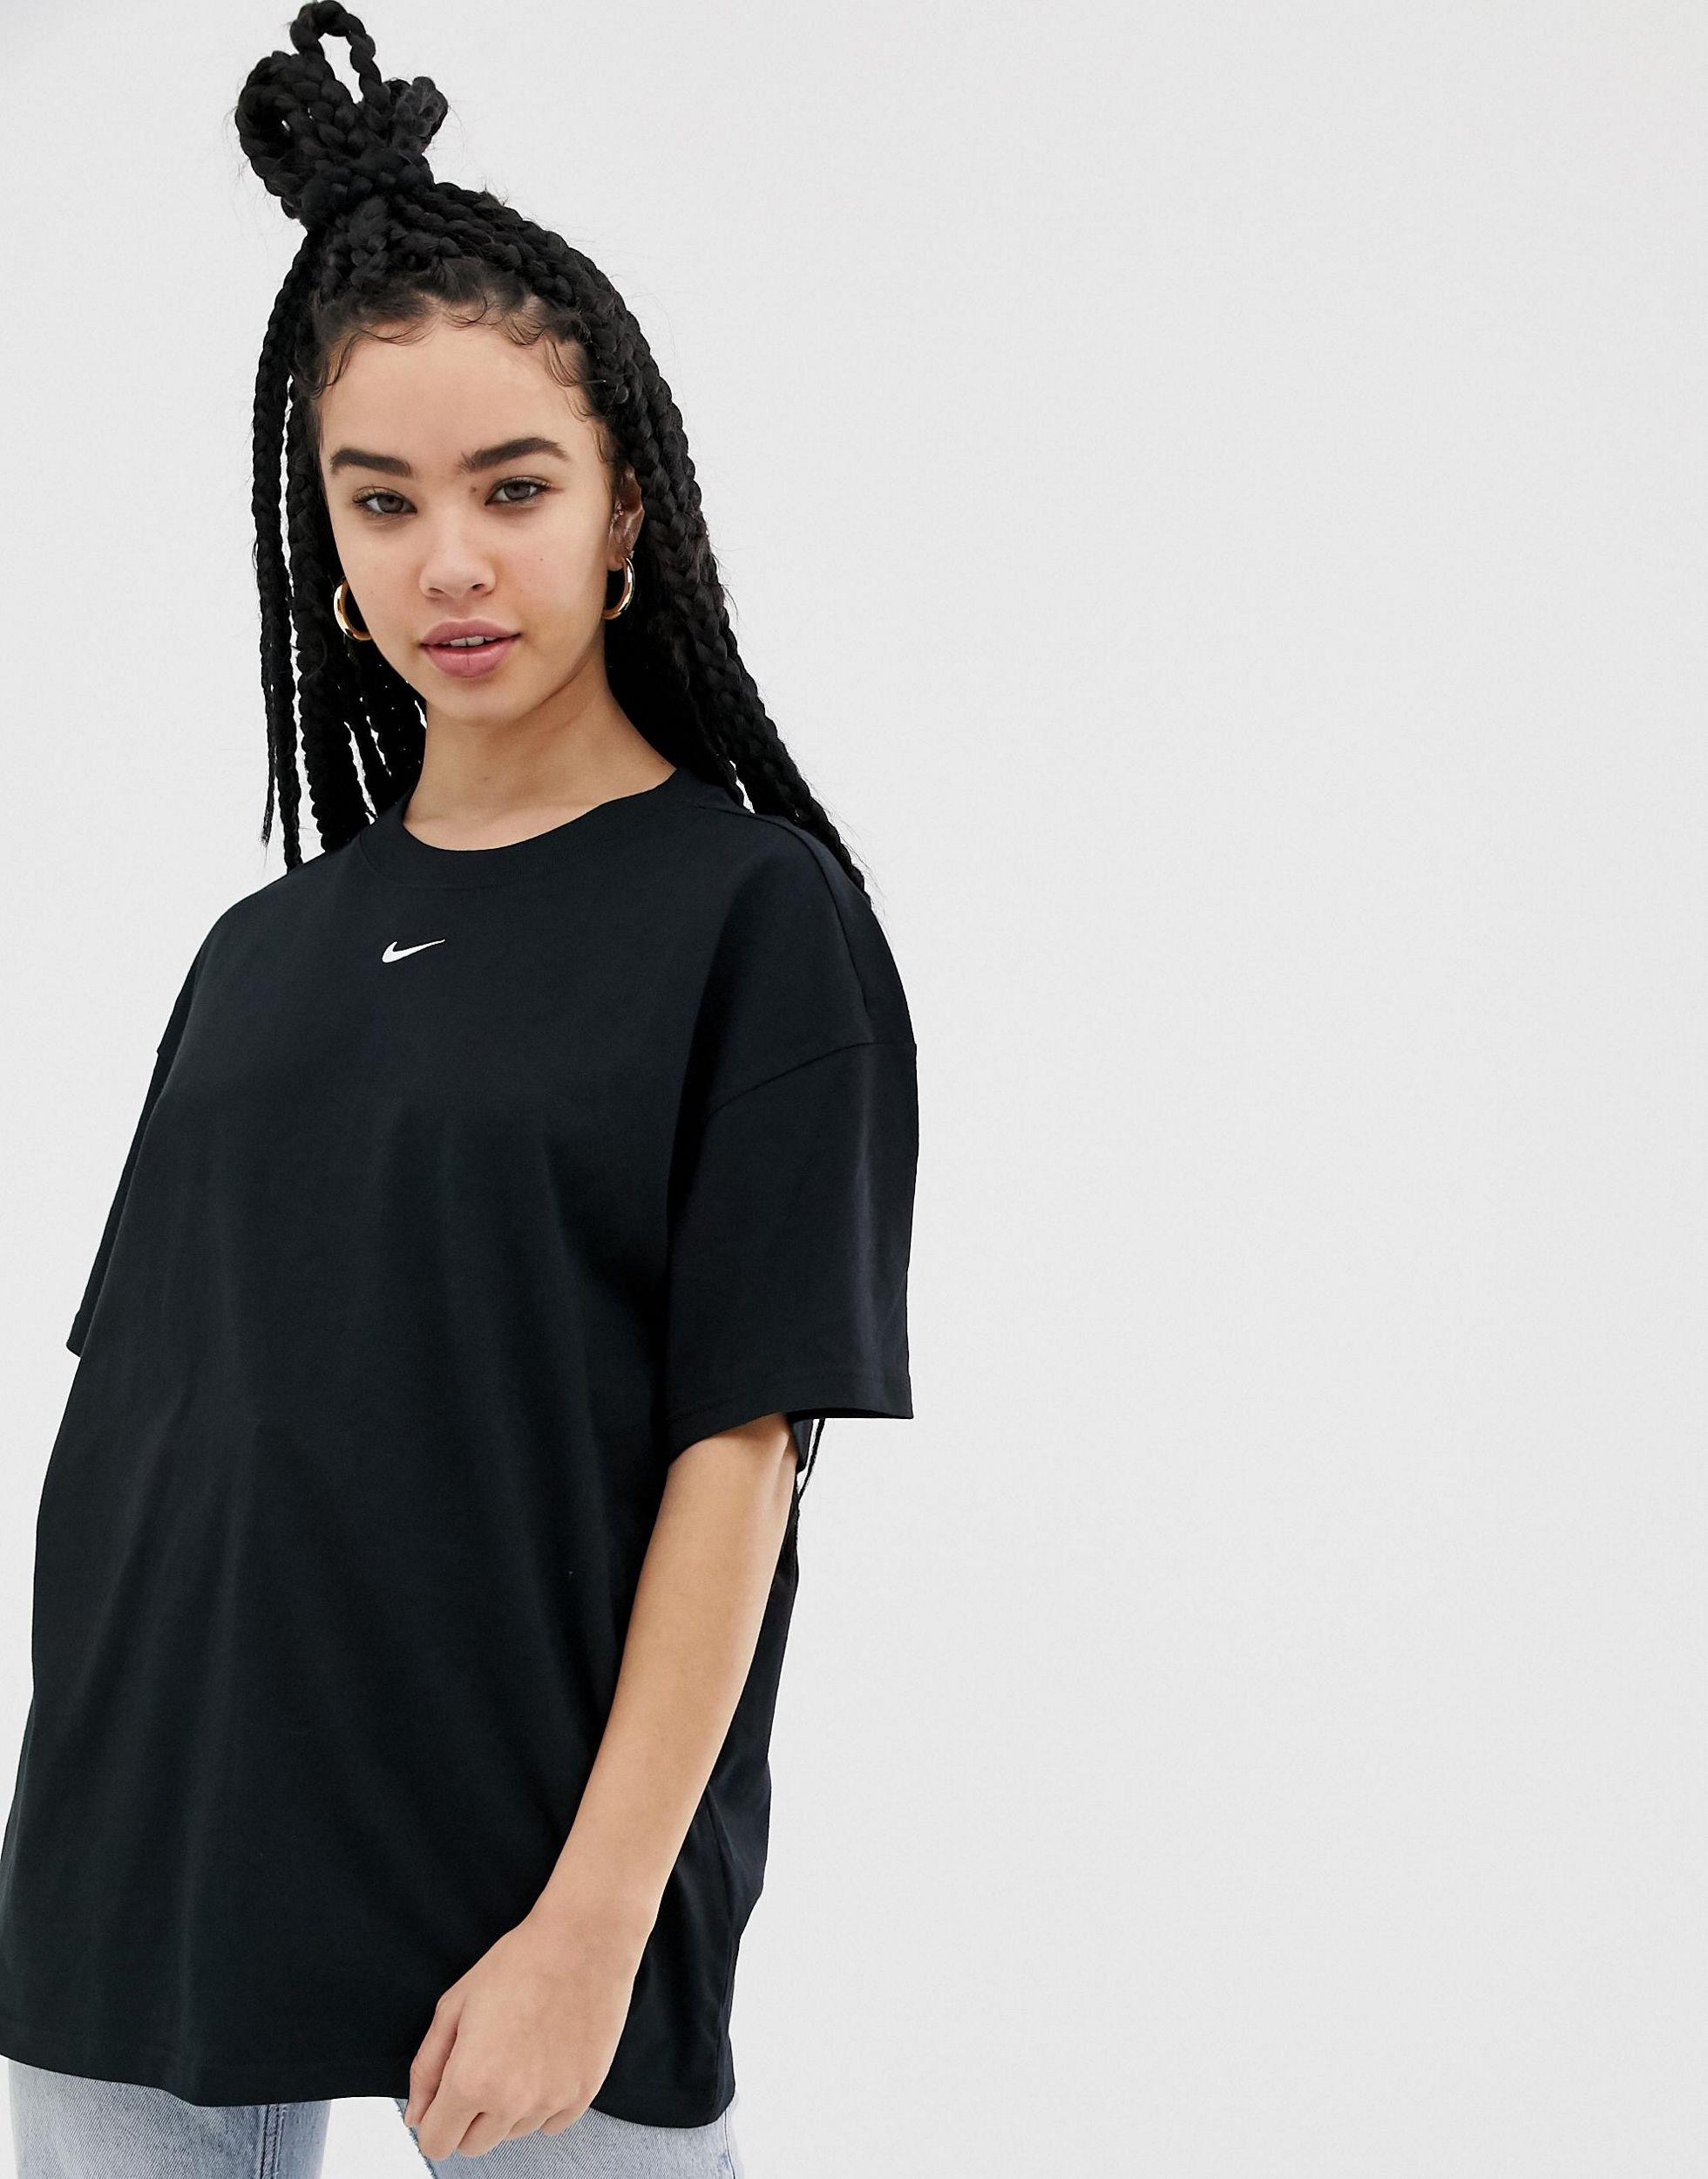 Nike Cotton Oversized Boyfriend T-shirt in Black/(White) (Black) - Lyst